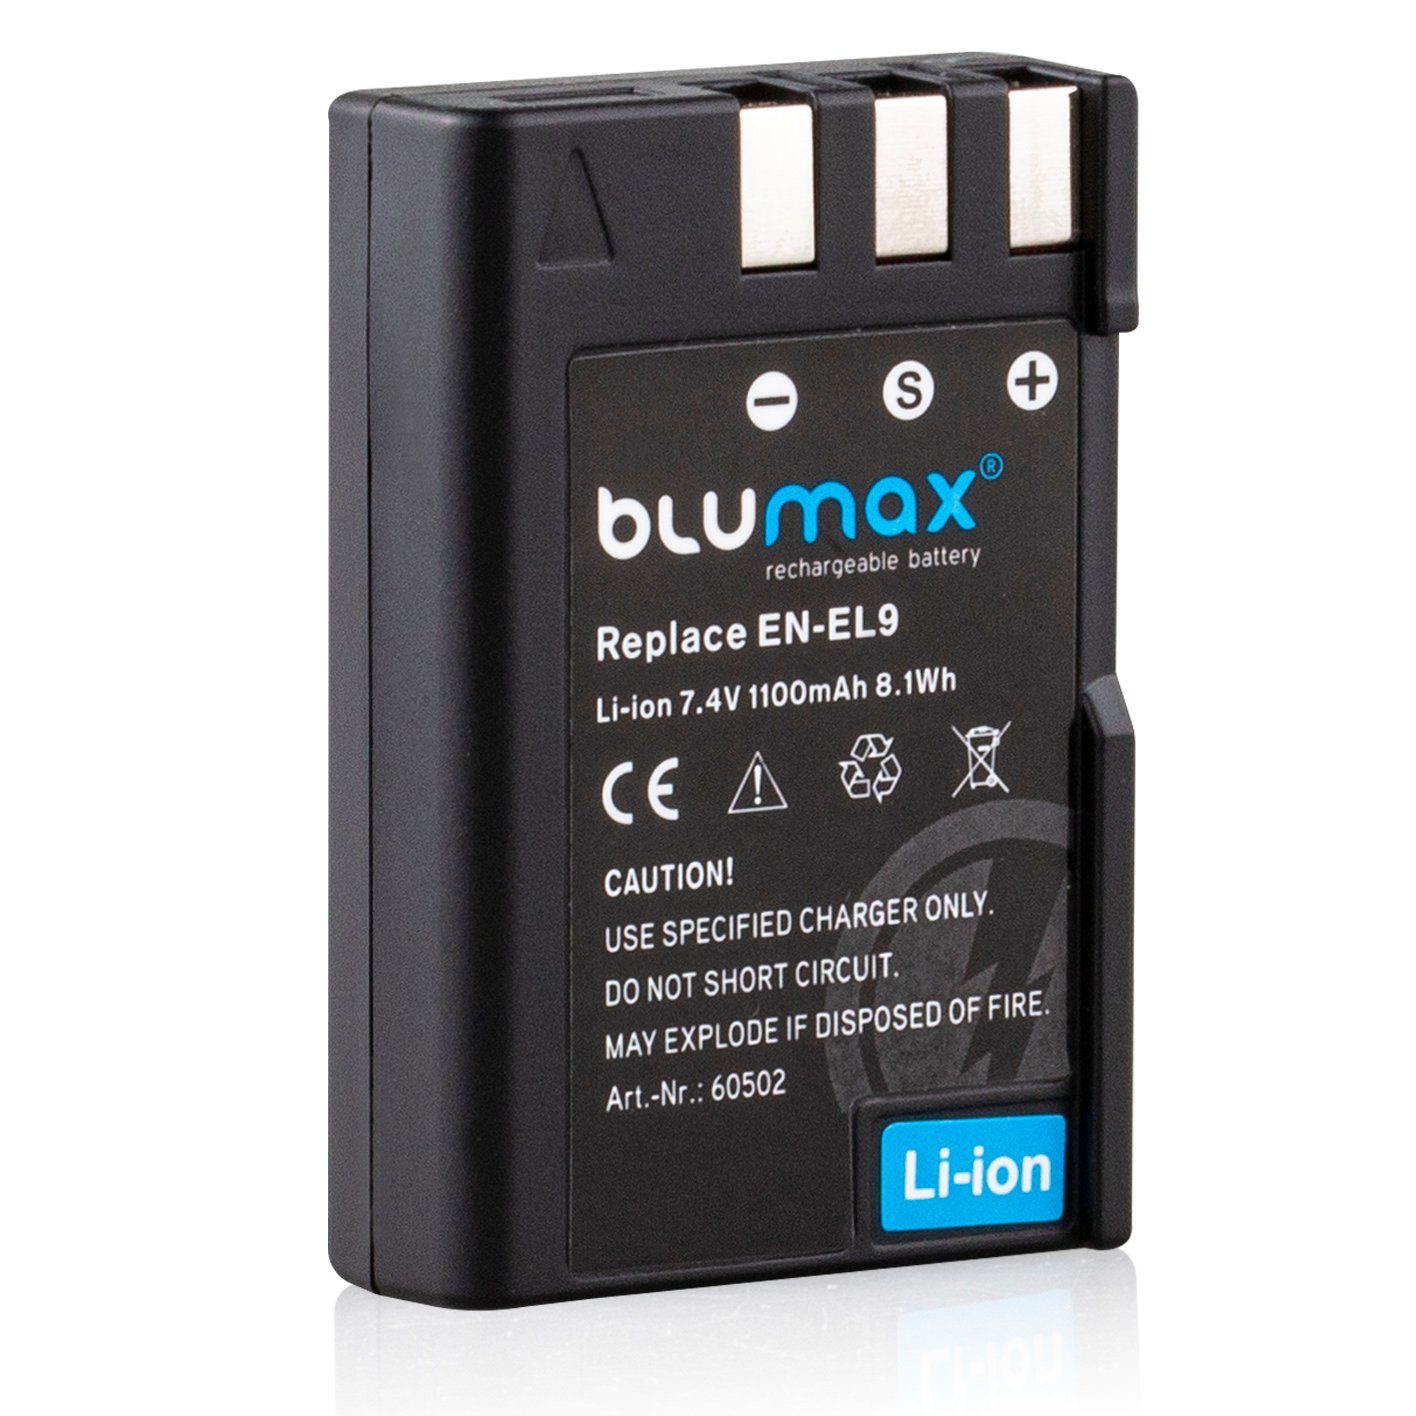 Blumax 2x Akku Kamera-Akku mAh für passend EN-EL9 1100 (7,4V) Nikon